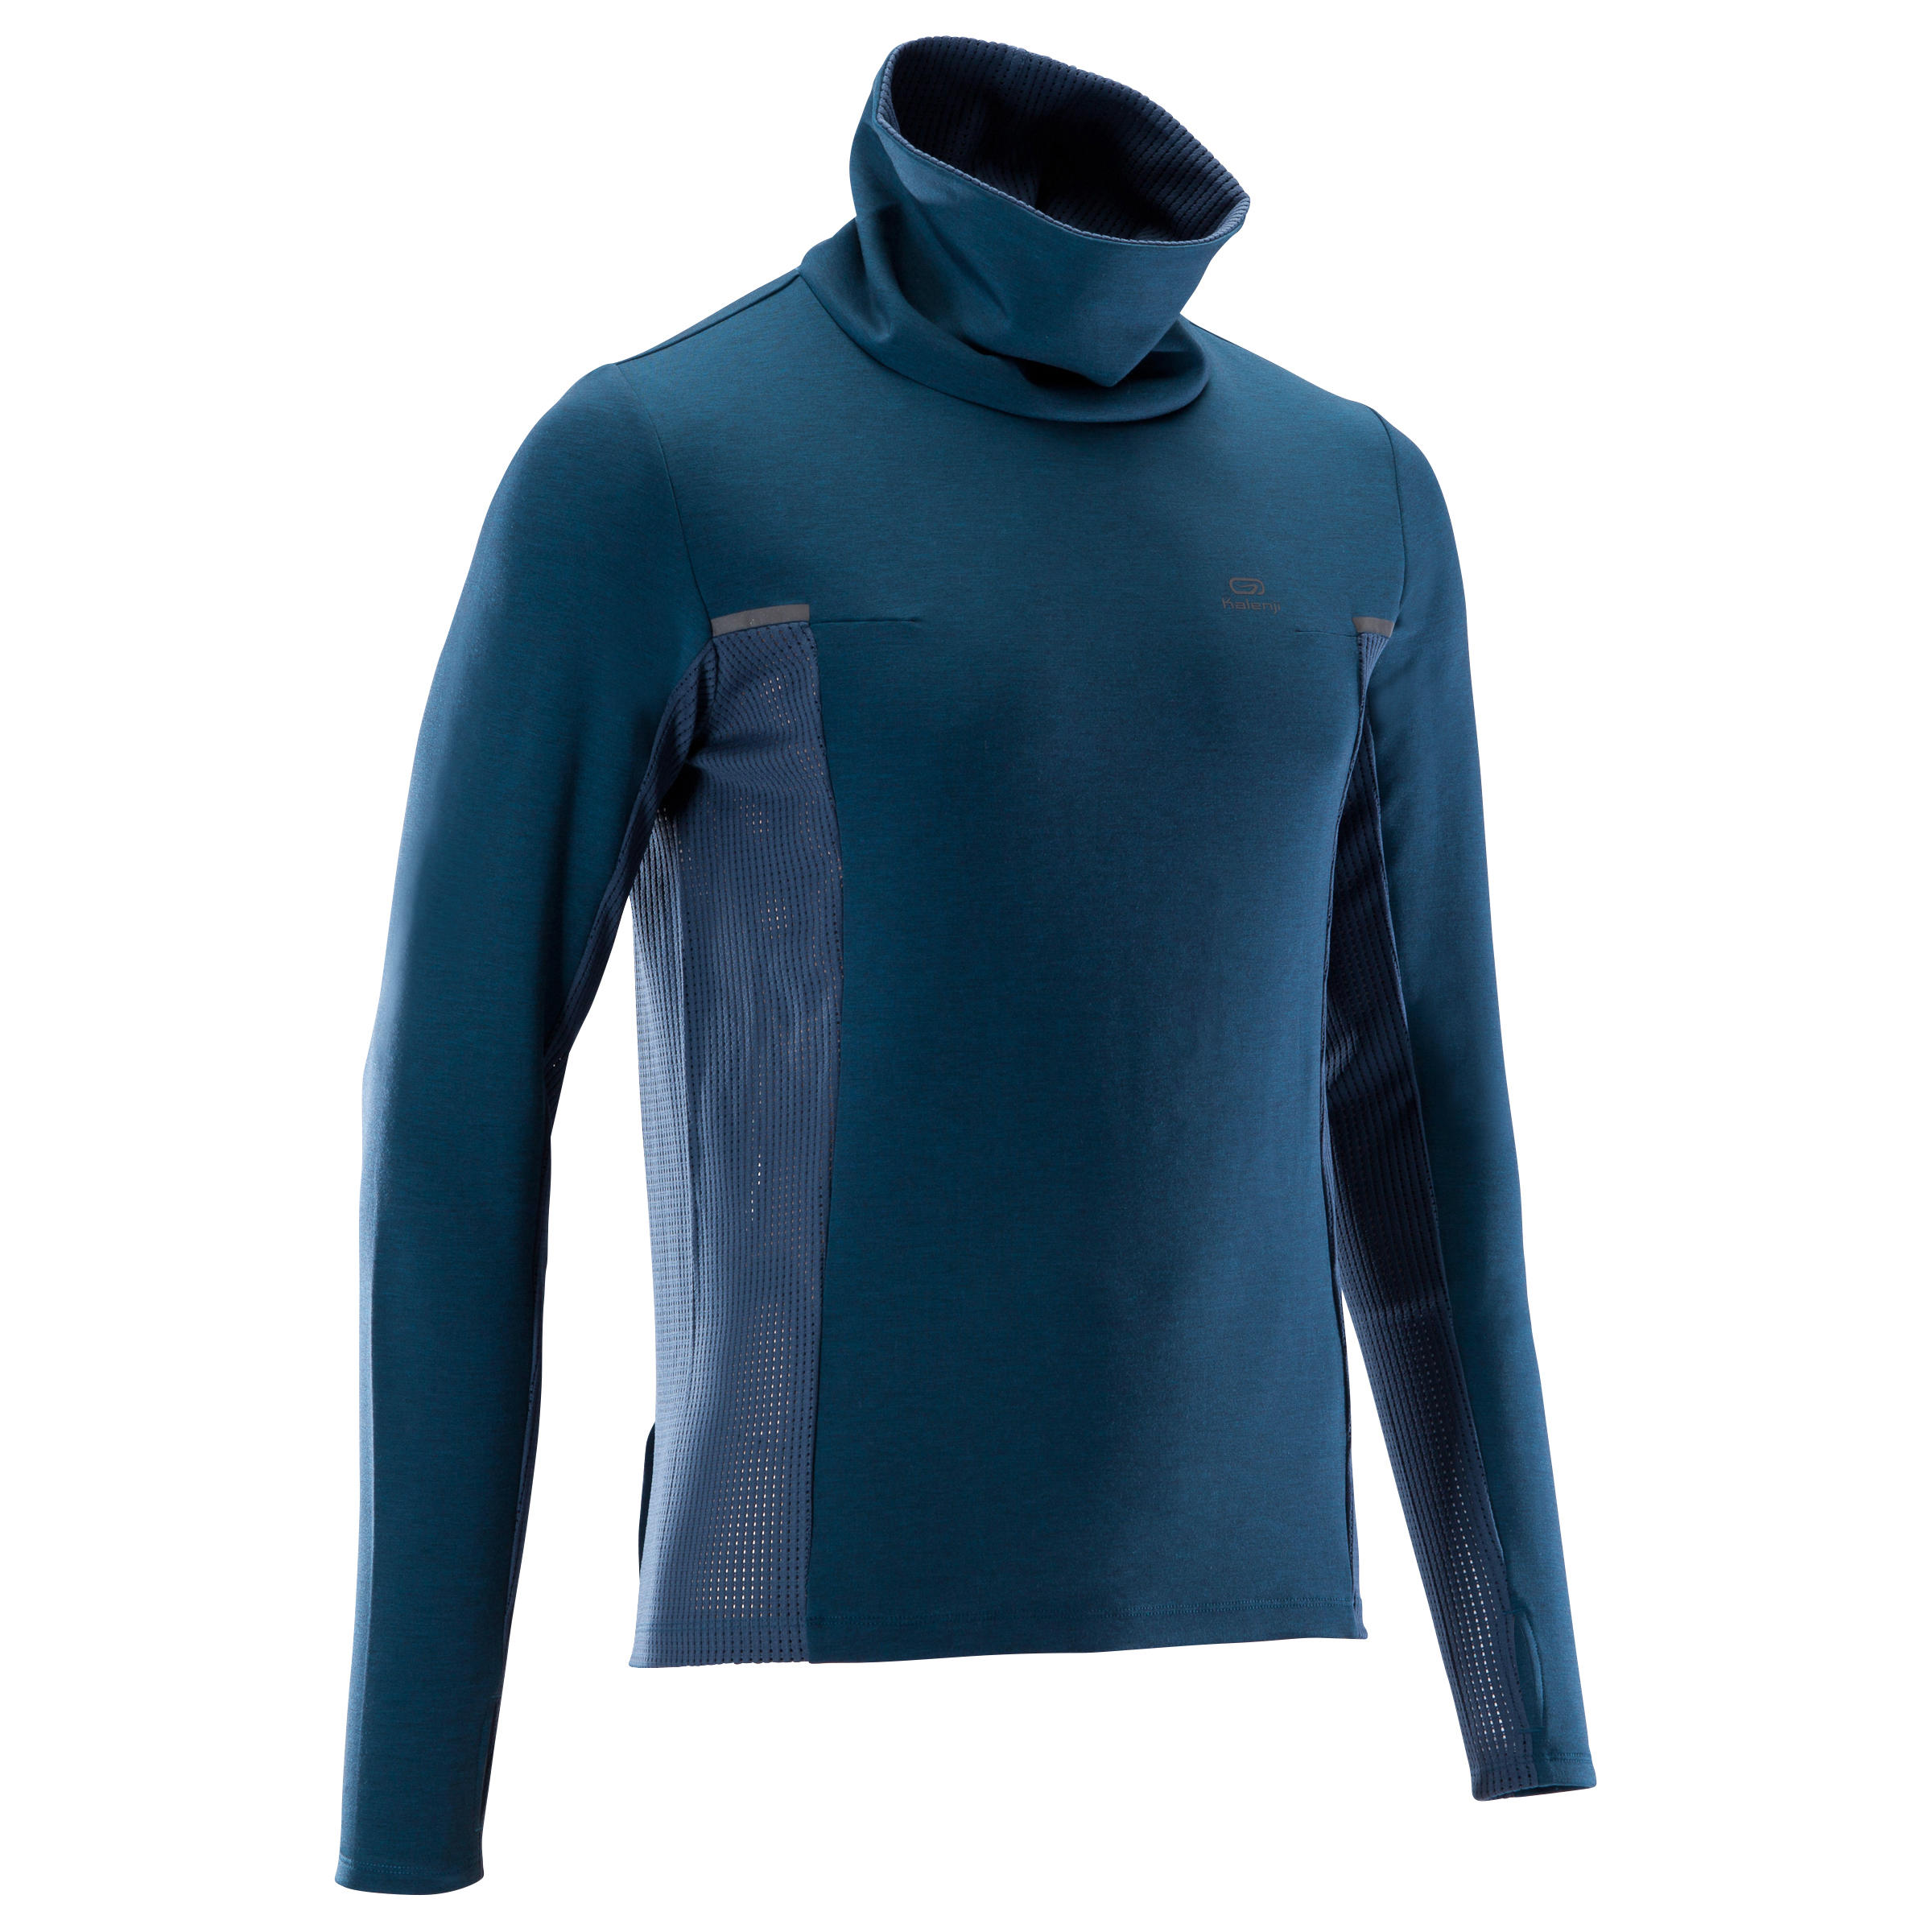 KALENJI RUN WARM+ men's running pullover high-collar blue